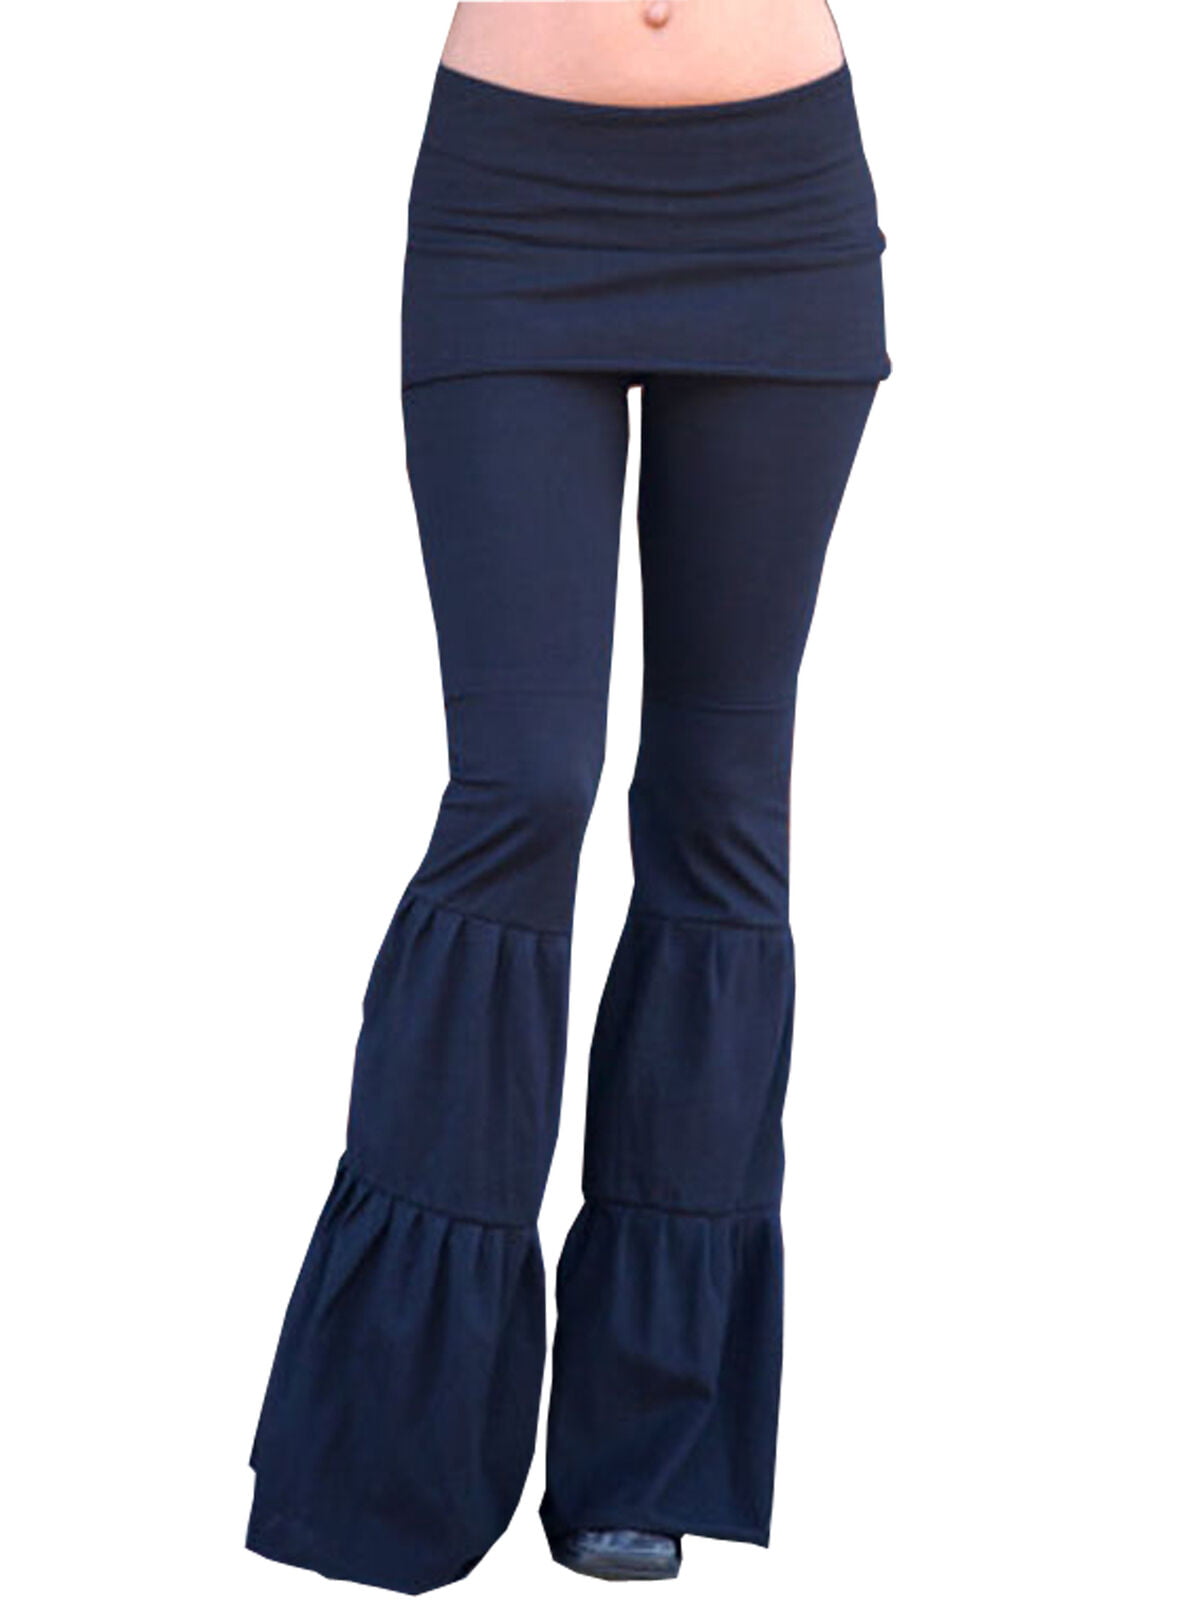 SweatyRocks Women's Elegant High Waisted Bell Bottom Flare Pants